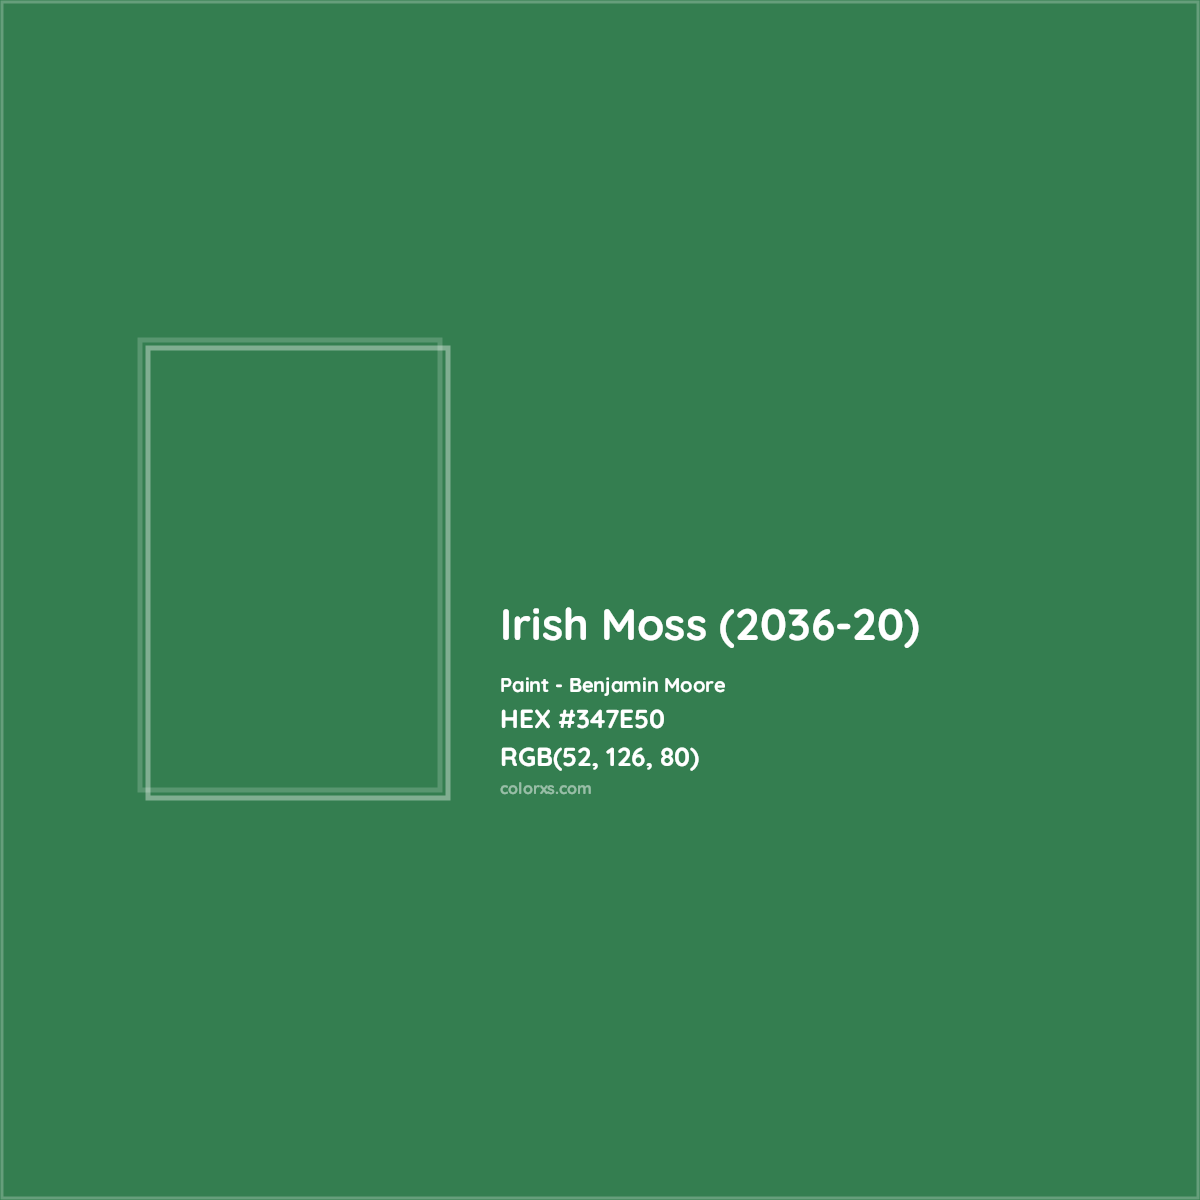 HEX #347E50 Irish Moss (2036-20) Paint Benjamin Moore - Color Code